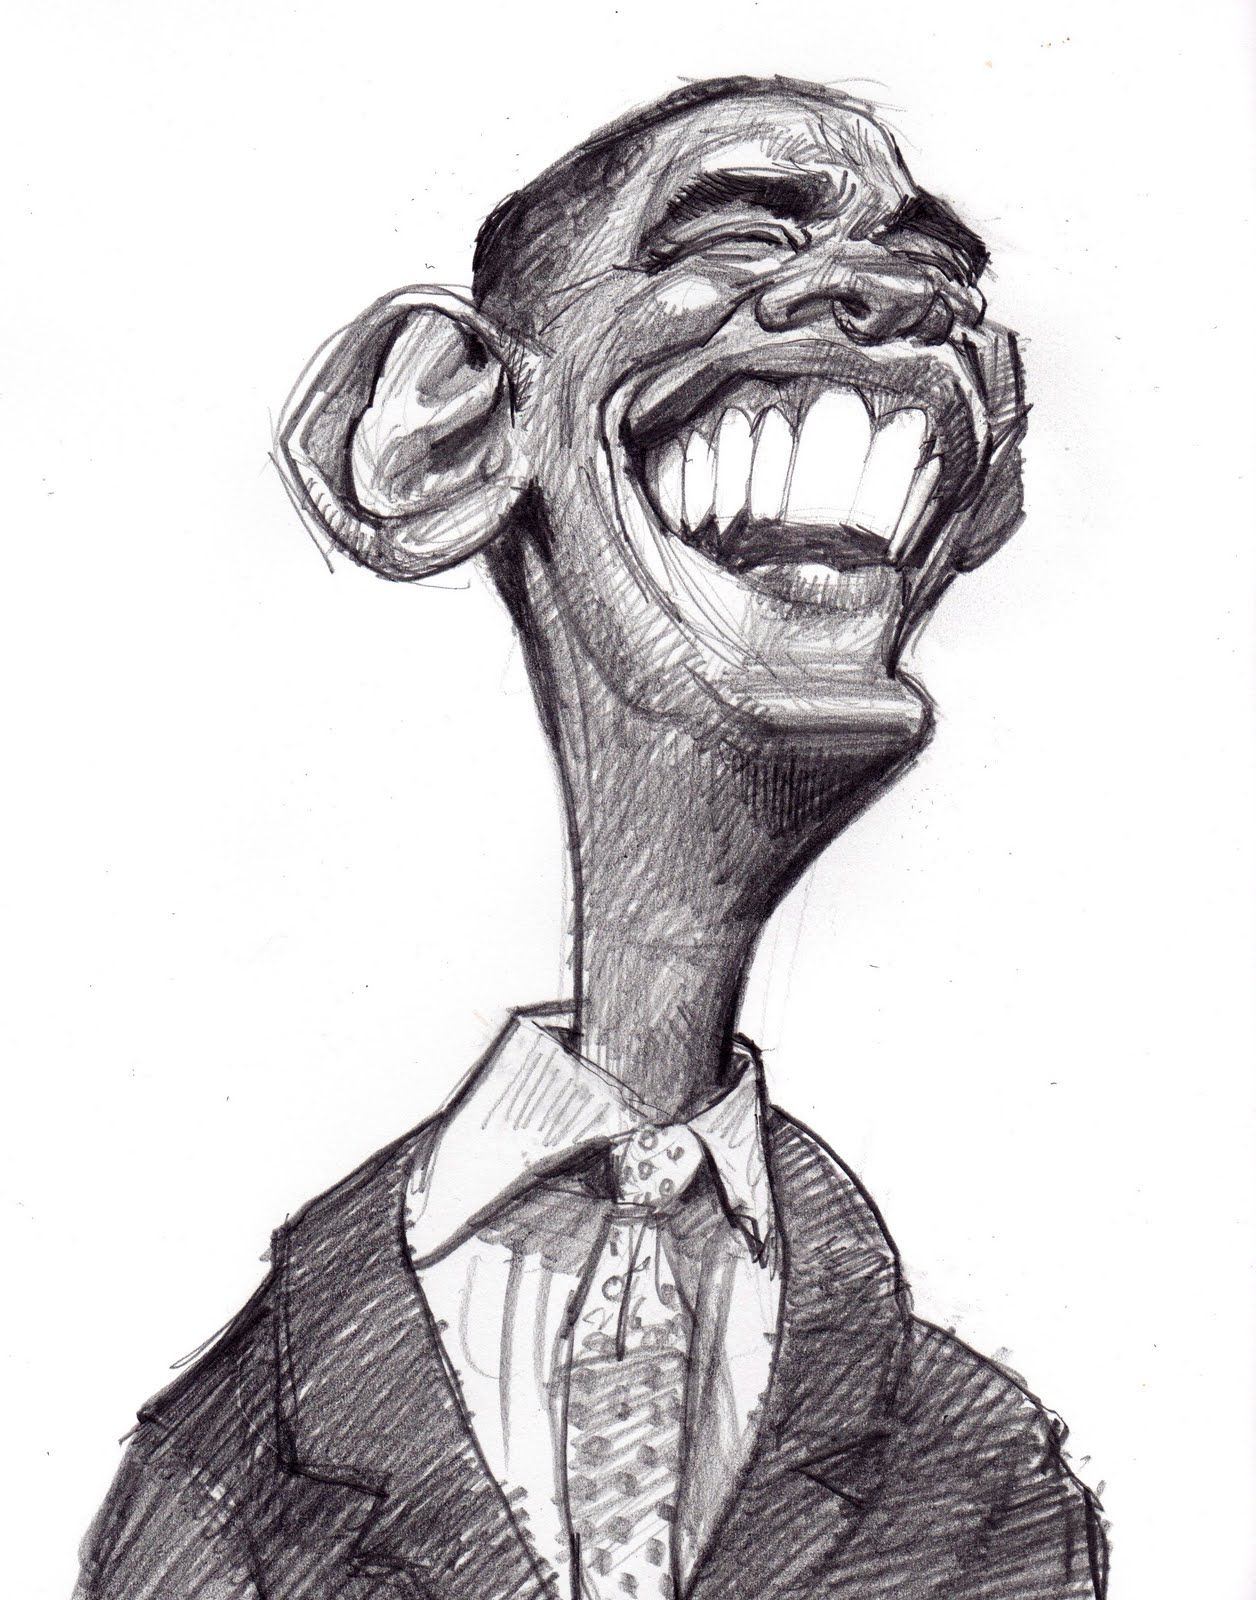 Сатирический образ человека шарж. Сатирический портрет Обама. Сатирический портрет Артура пирожкова. Сатирический портрет Милохина. Сатирические образы человека.